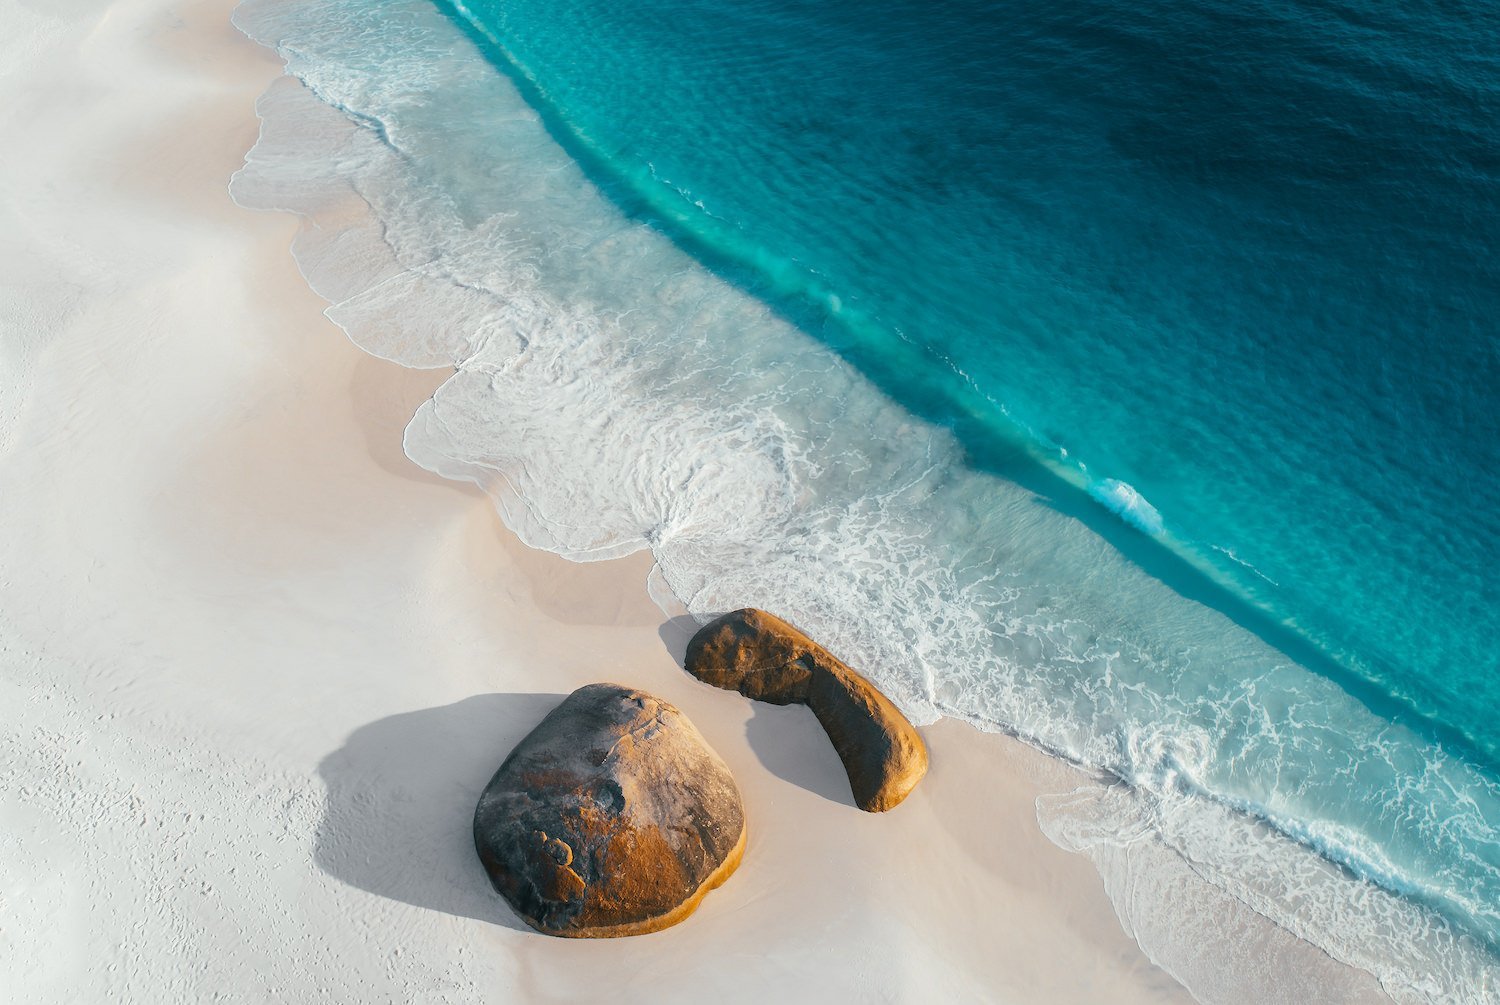 Two Rocks On The Beach | Premium Framed Print - Peter Yan Studio